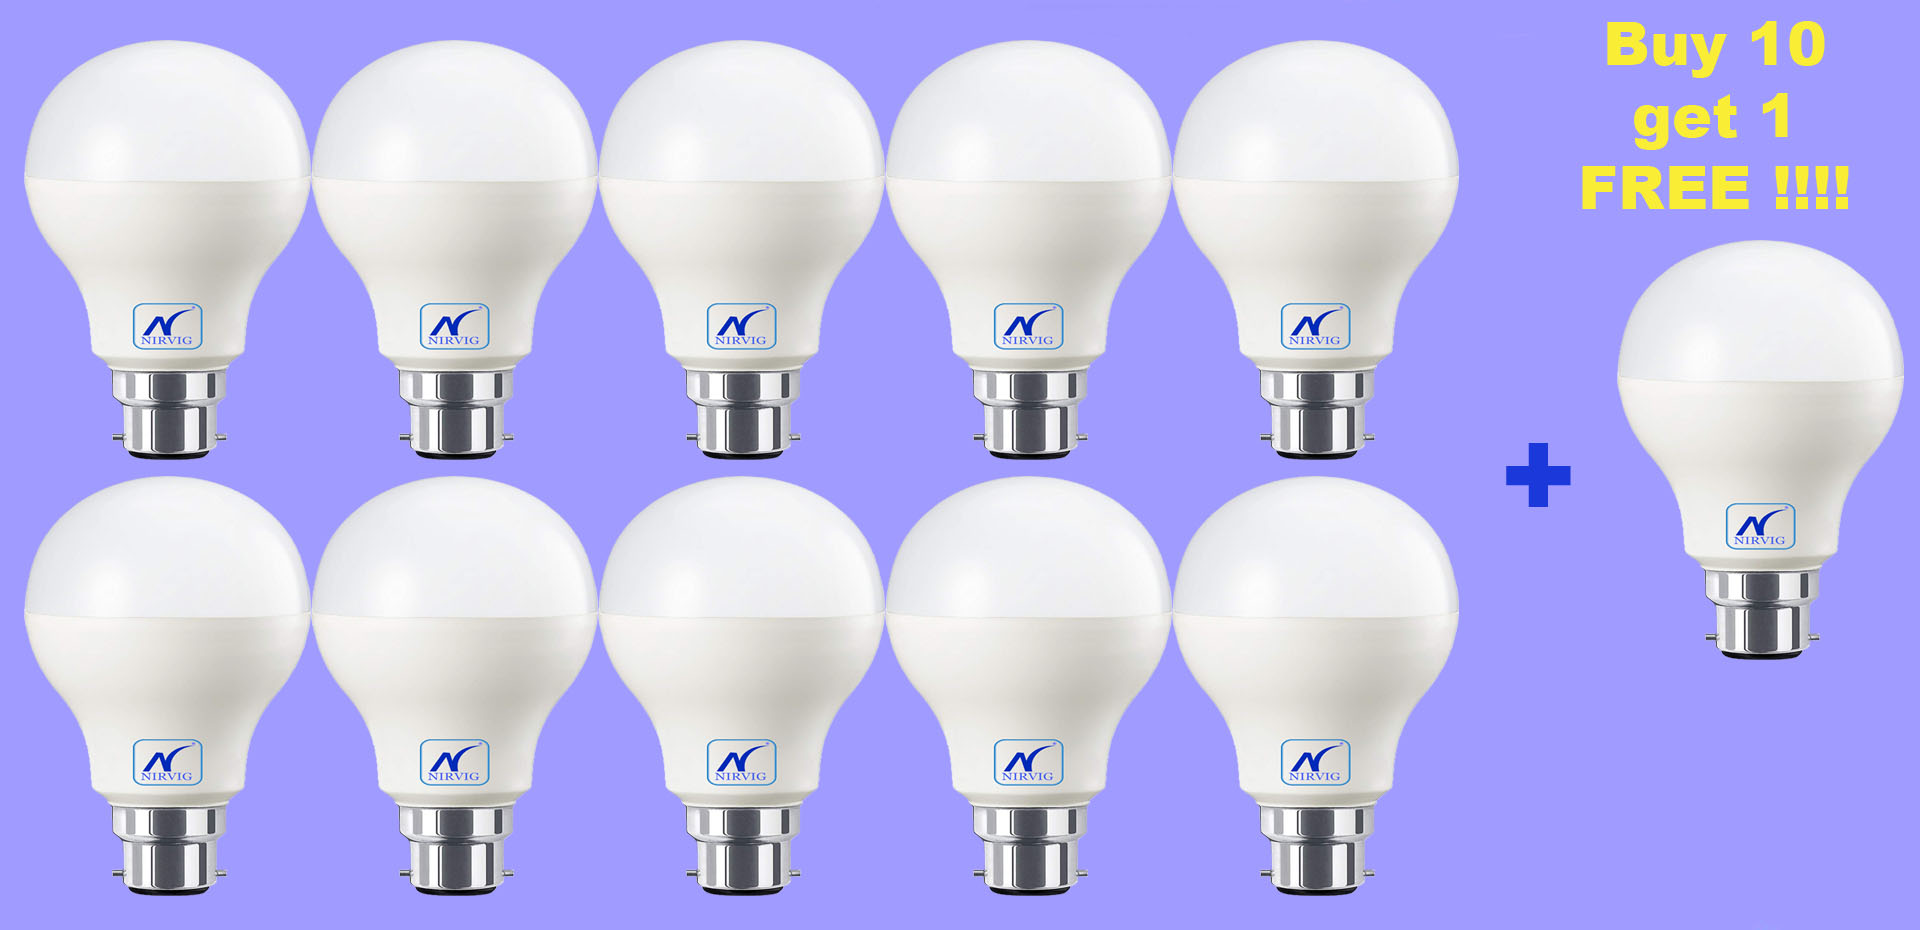 Nirvig - 9W Cool White LED Bulb - Model: B - Buy 10 Get 1 FREE...!!!